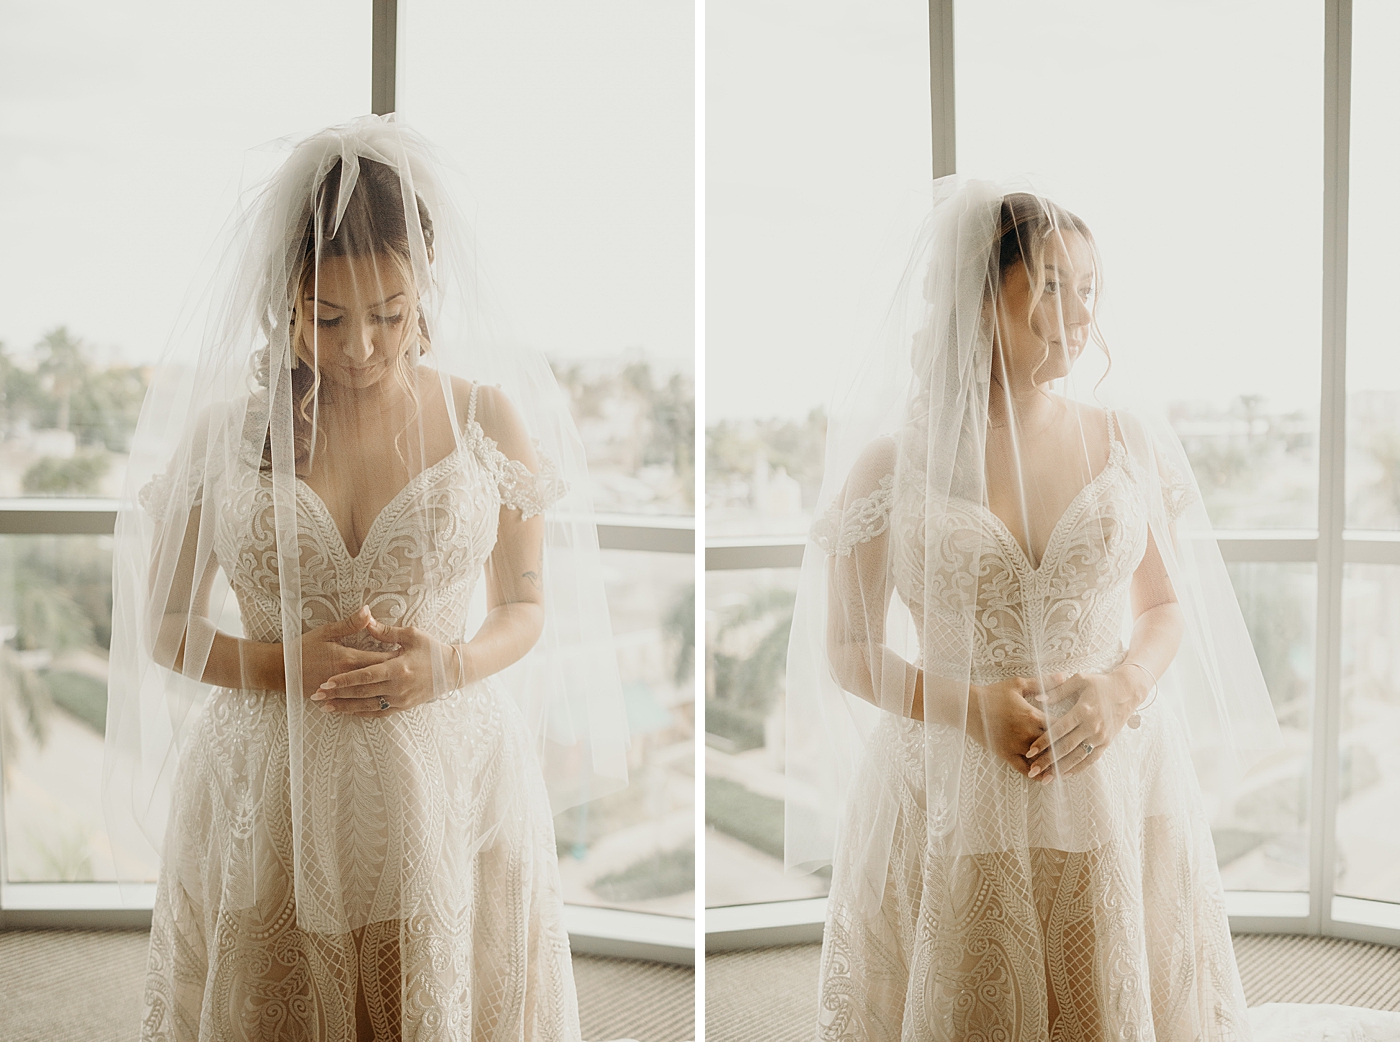 Portrait shots of Bride with veil over her face Benvenuto Restaurant Wedding Photography captured by South Florida Wedding Photographer Maggie Alvarez Photography